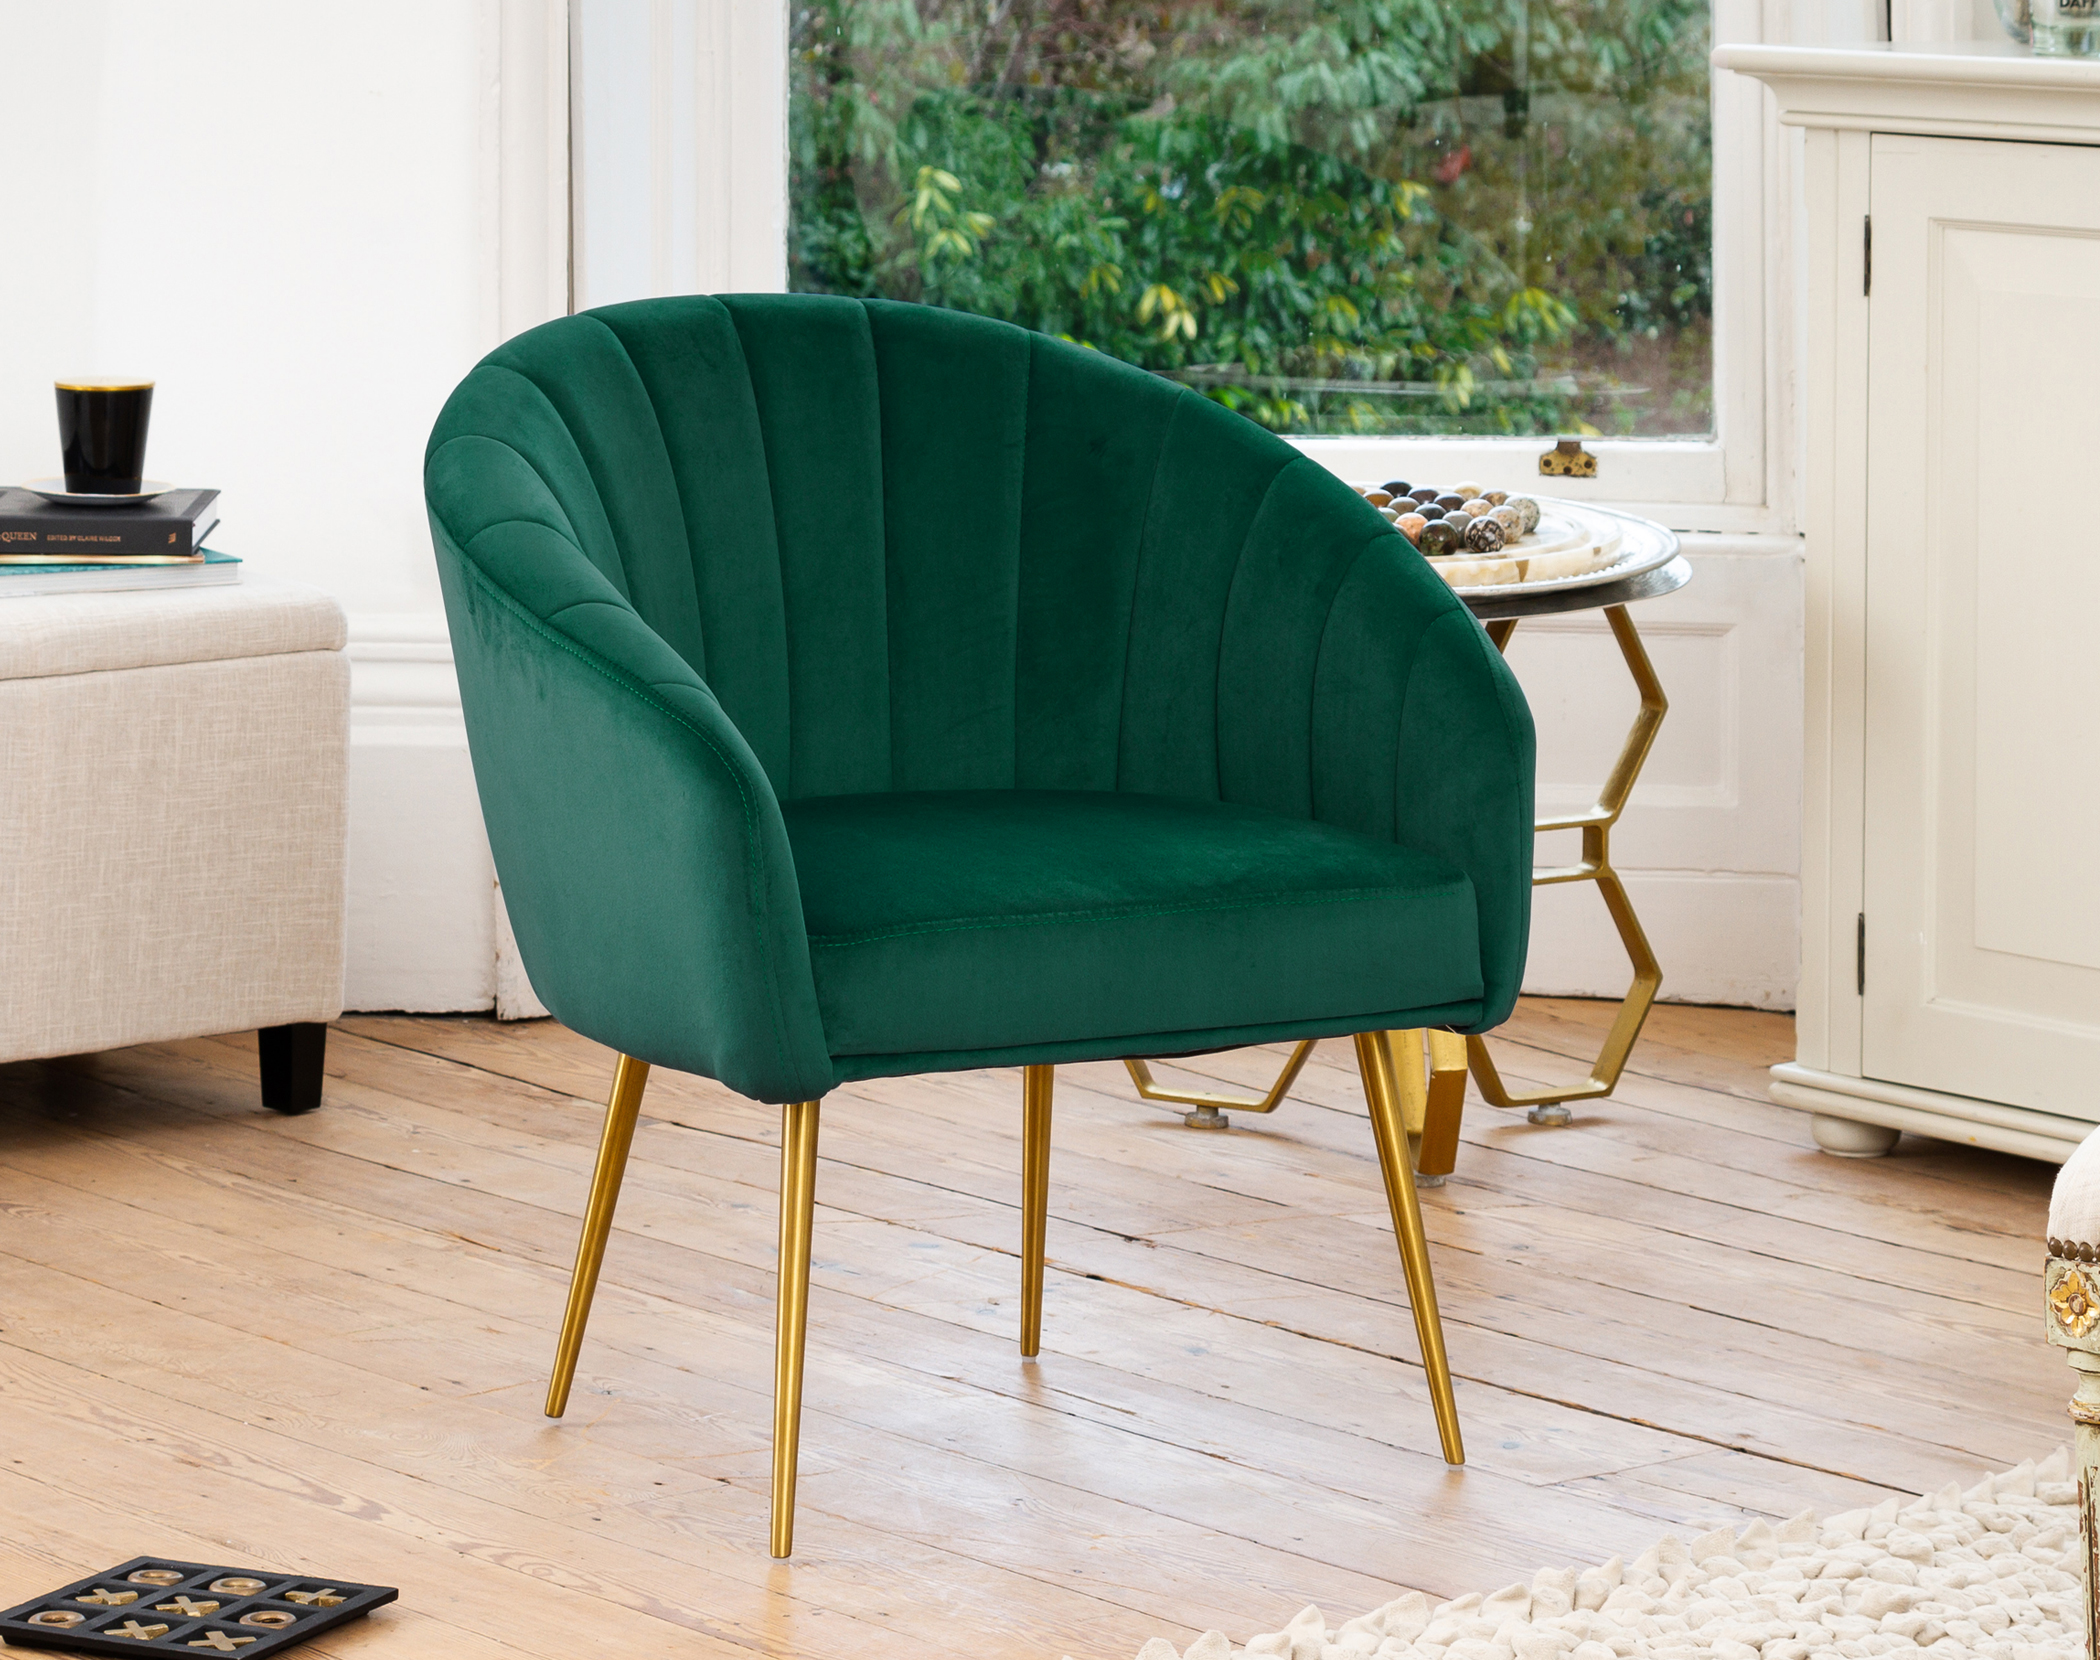 The Sofa Company, Leather Sofa Green Armchair